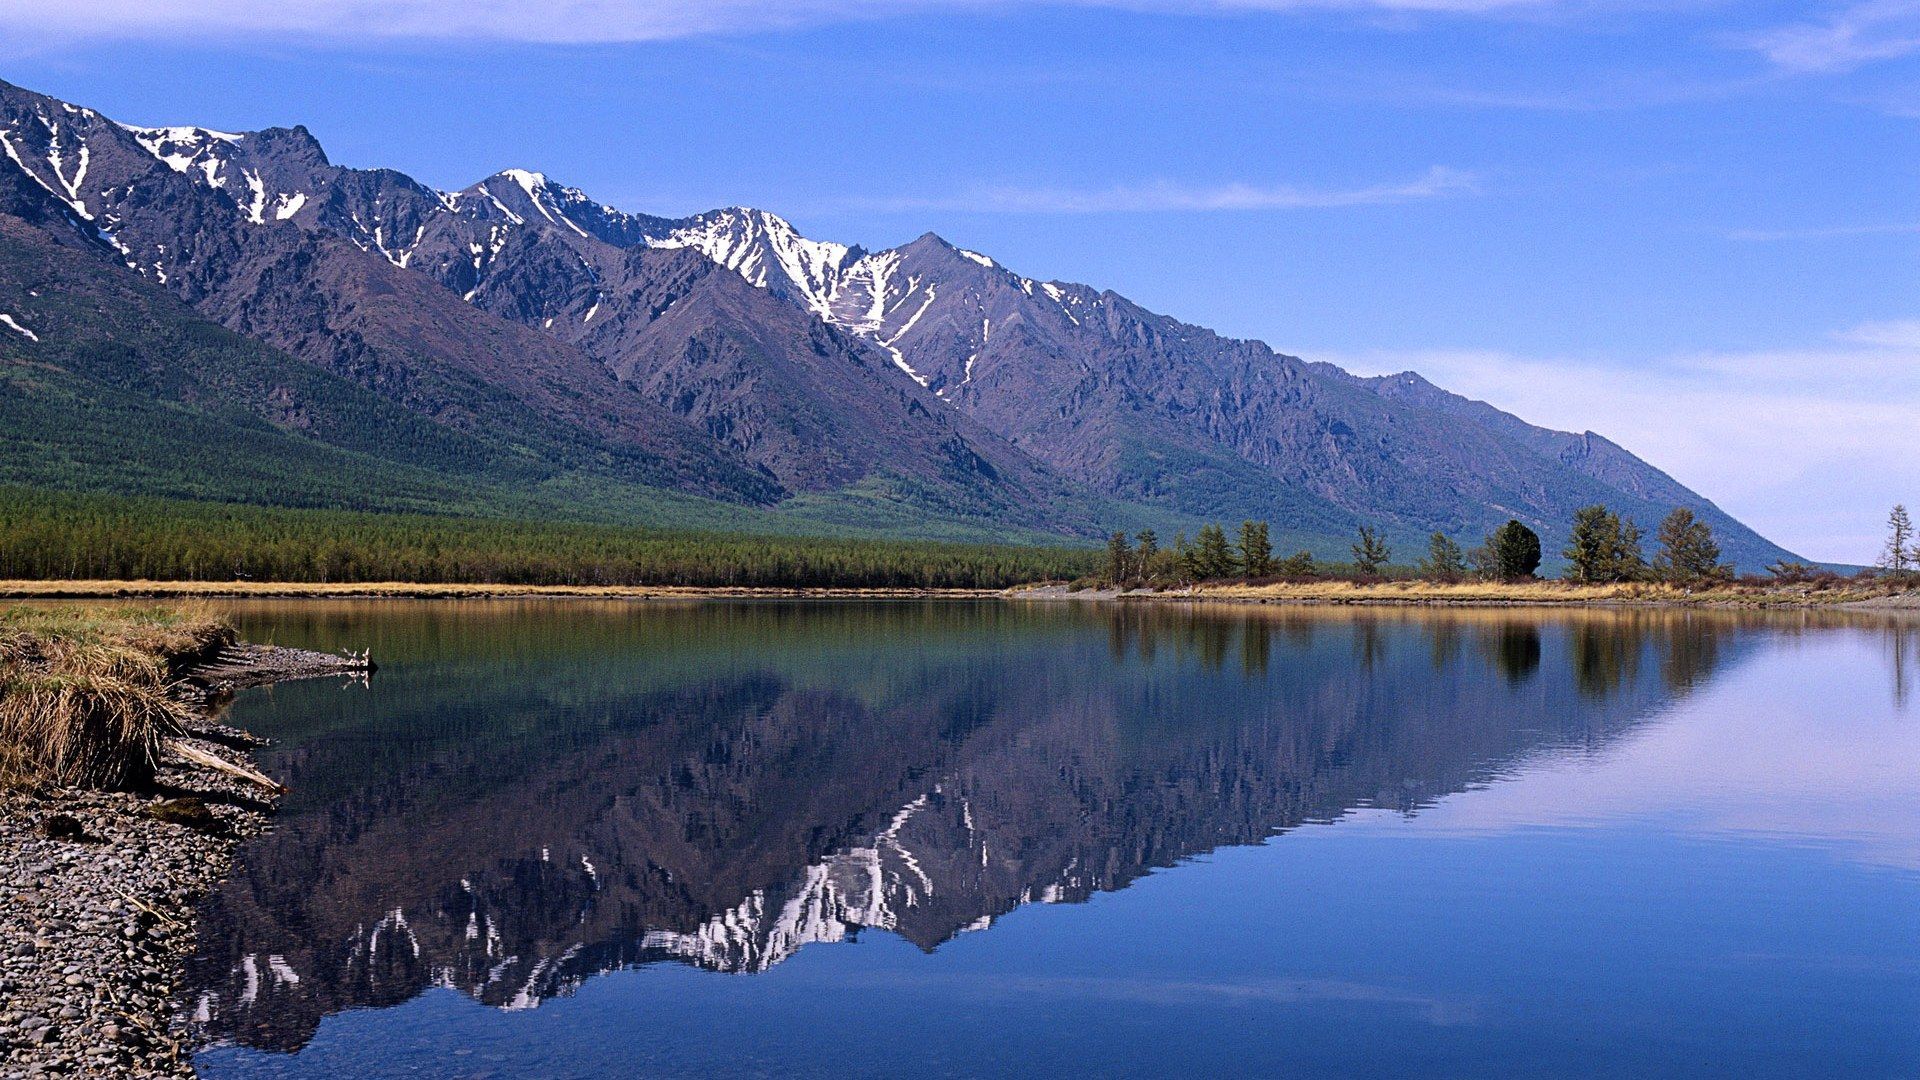 HD Wallpapers Baikal Lake and Sayan Mountain Range in Siberia